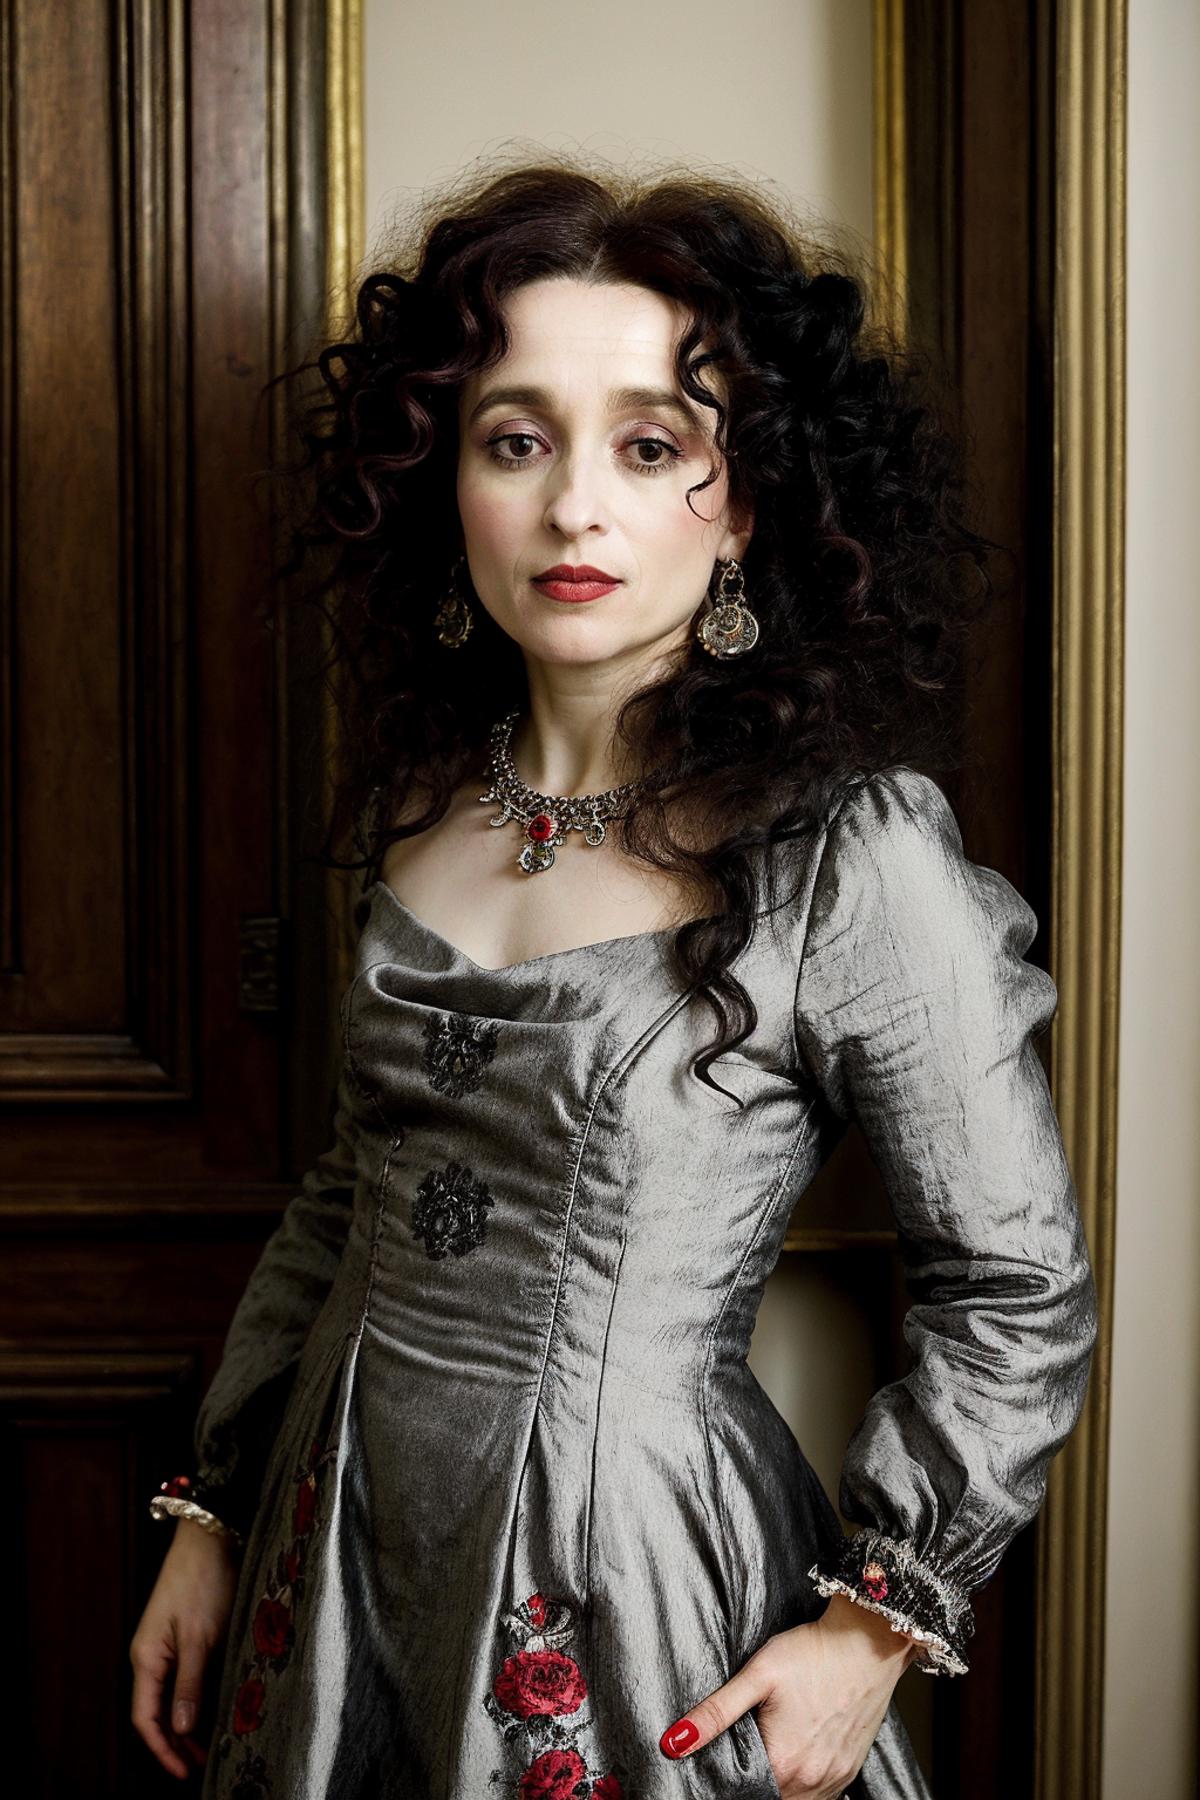 Helena Bonham Carter image by dbst17